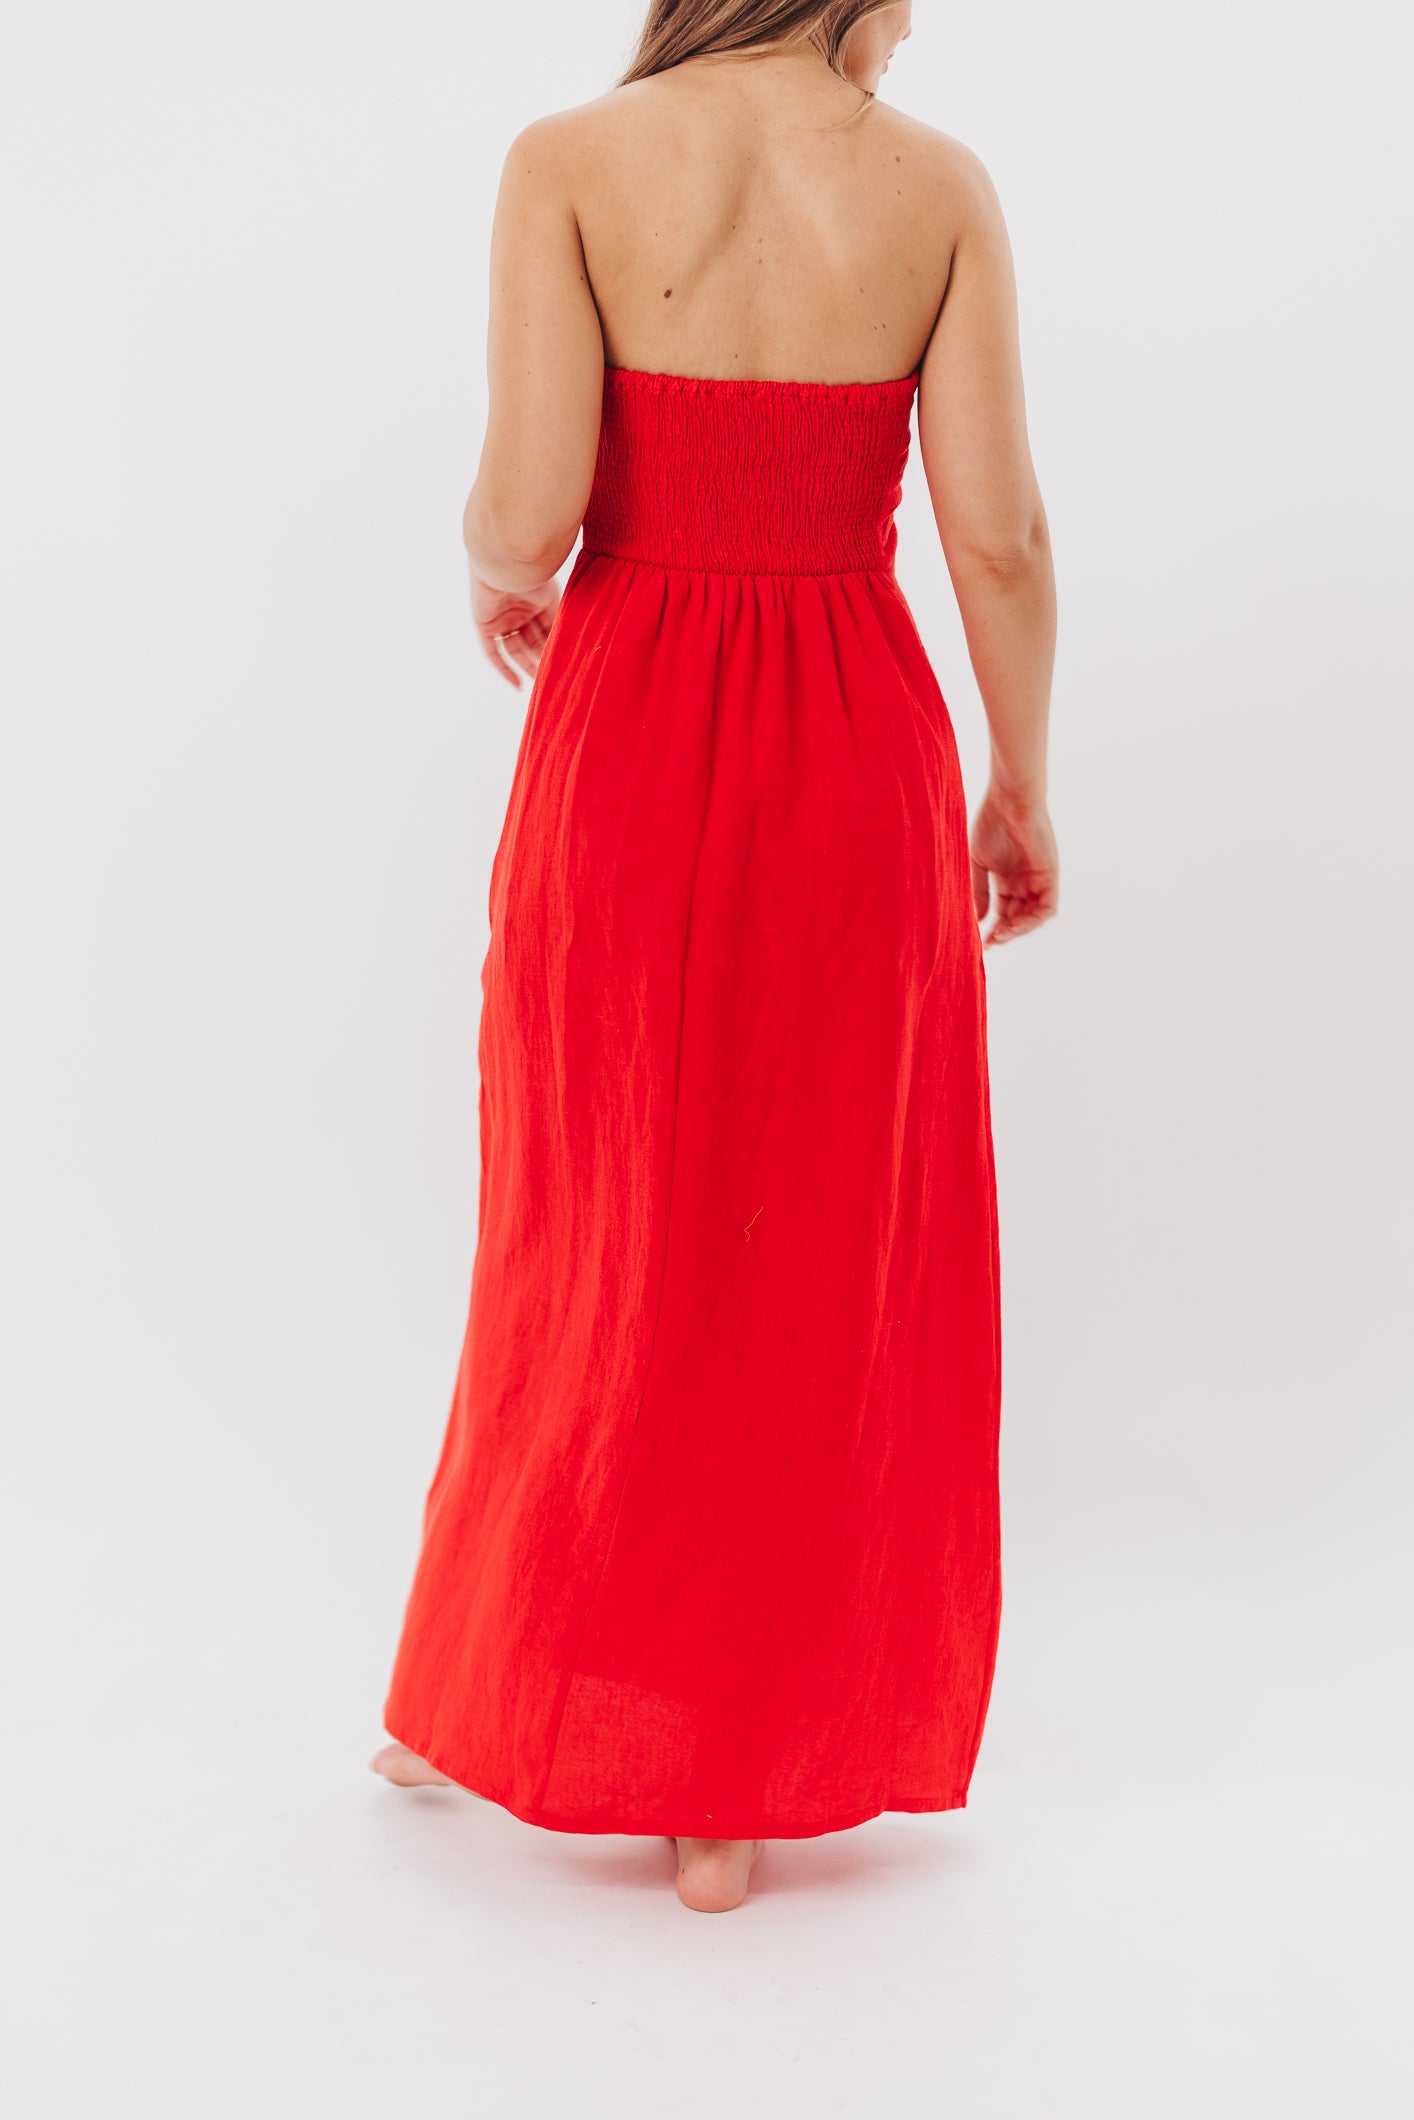 Blair Linen Maxi Dress in Red